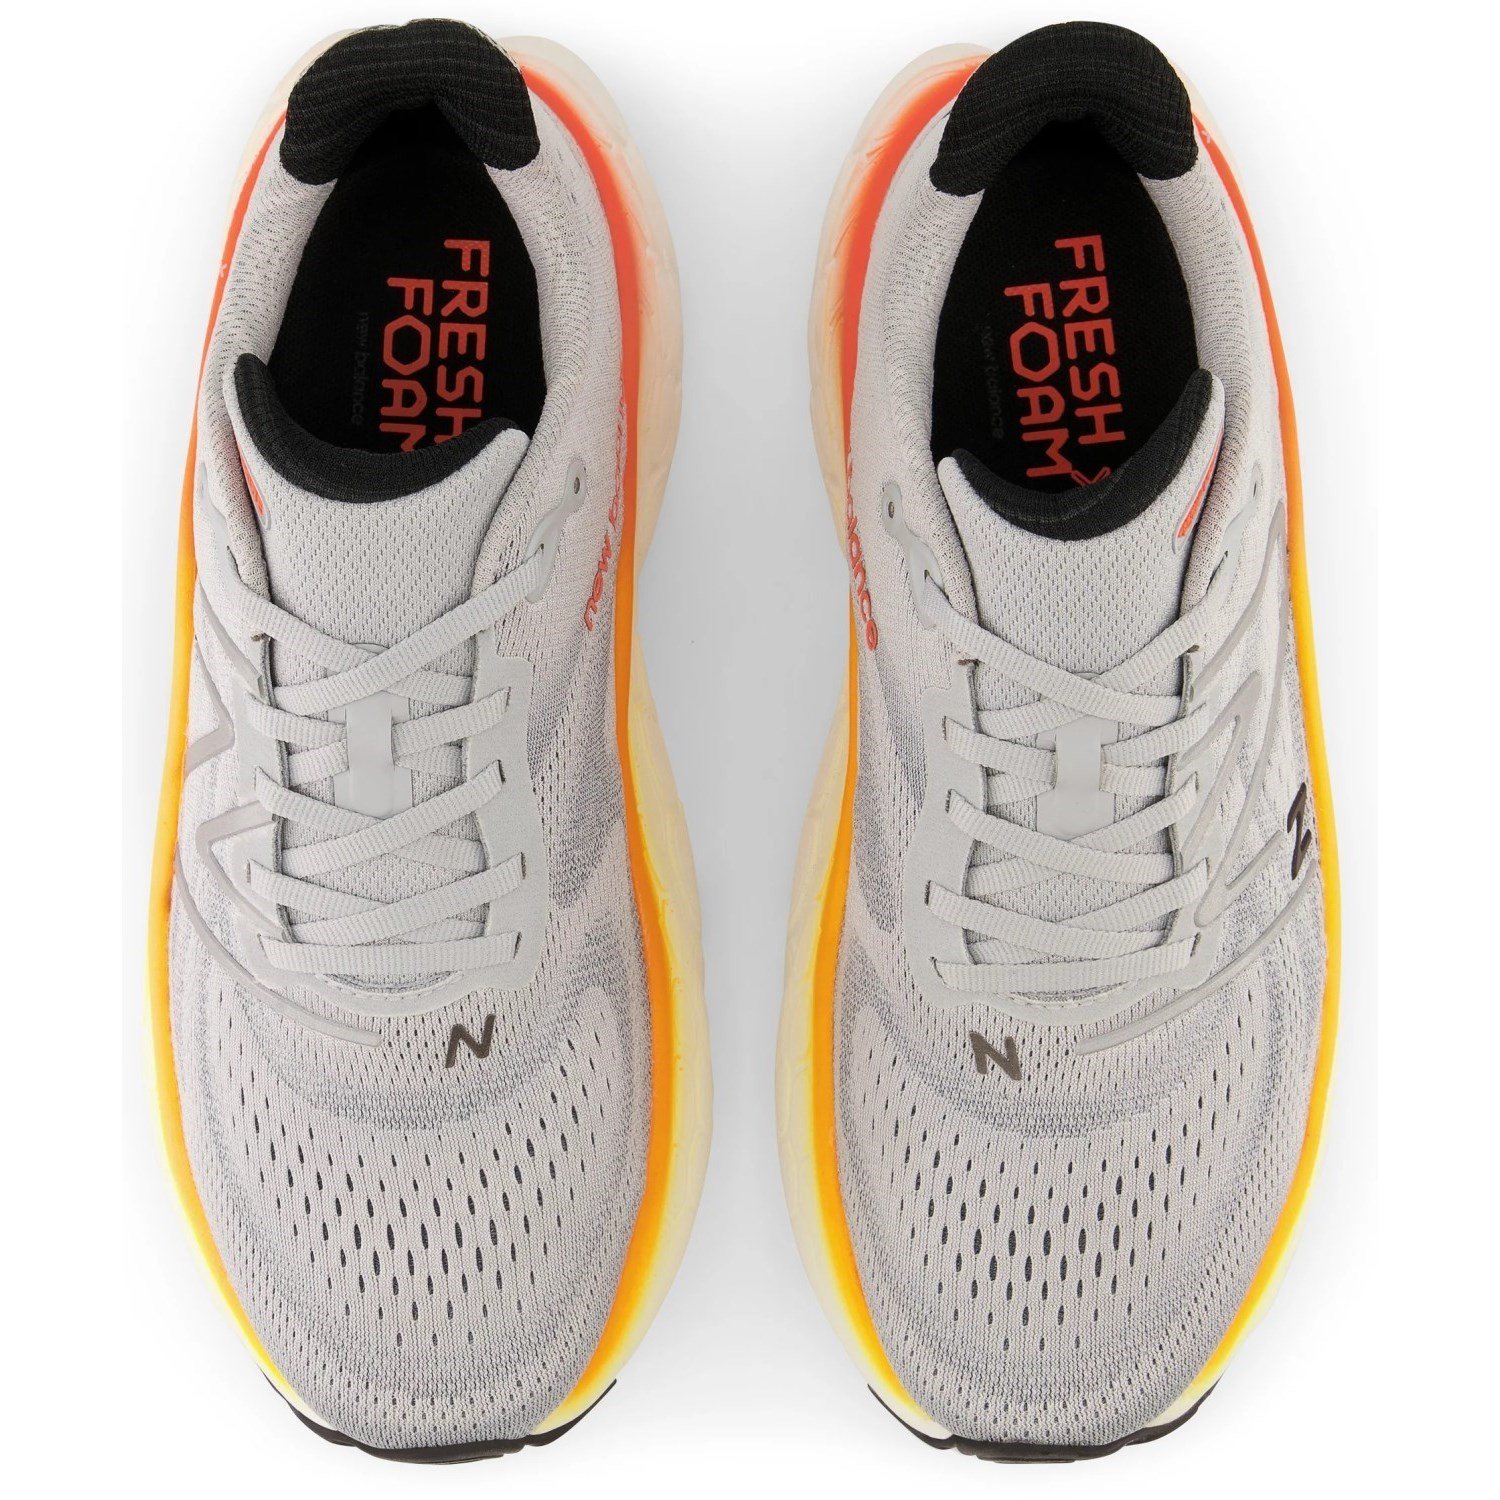 New Balance Fresh Foam More v4 - Mens Running Shoes - Aluminum Grey ...